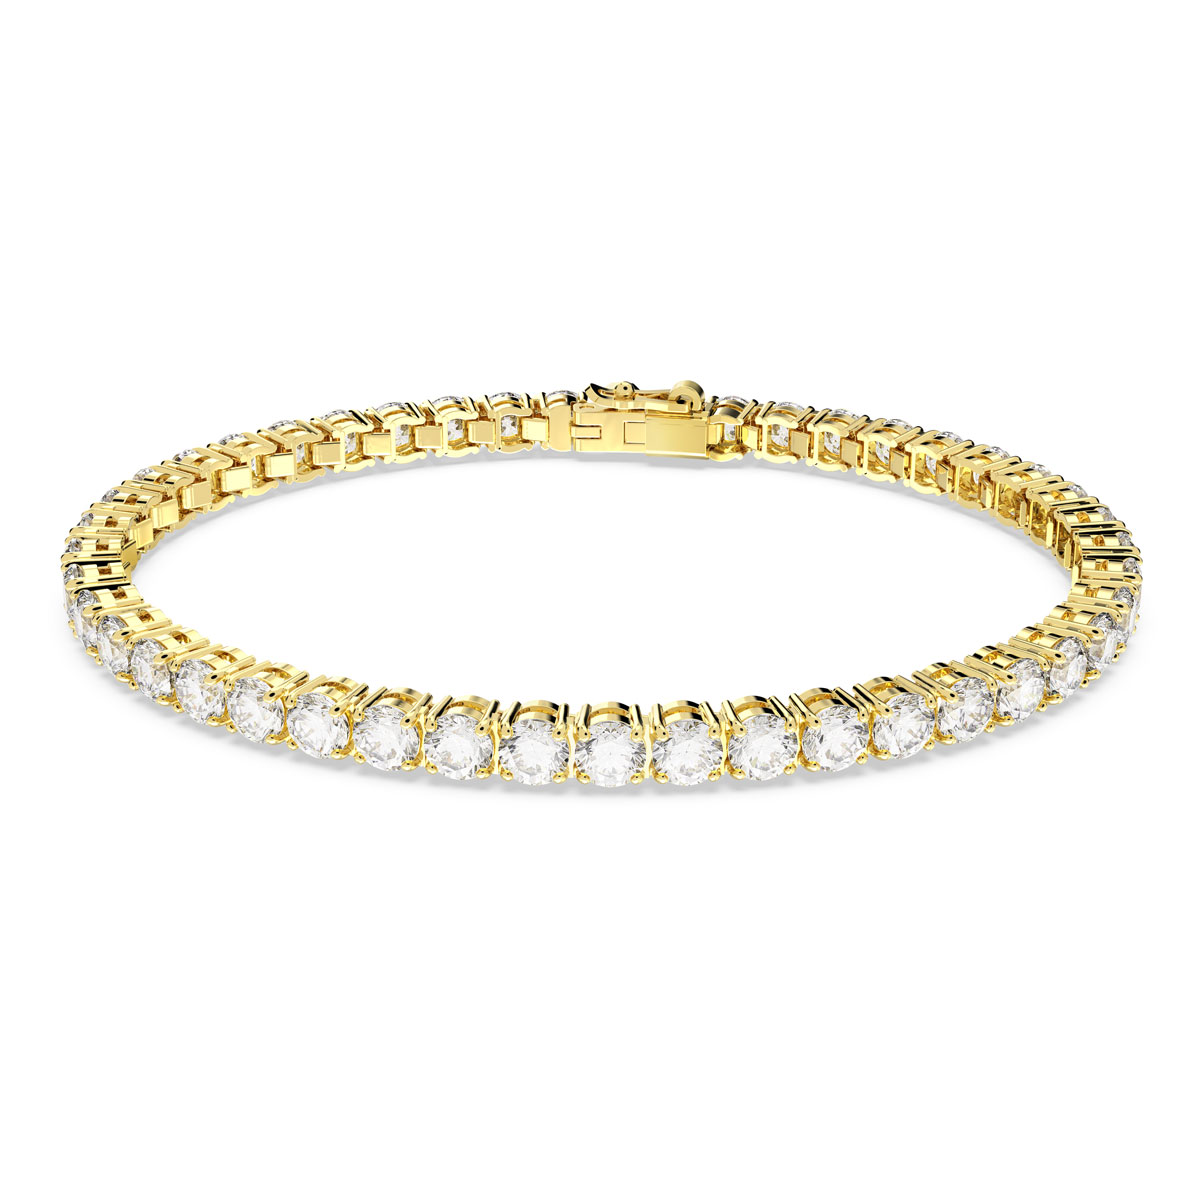 Swarovski Jewelry White, and Gold Matrix Bracelet